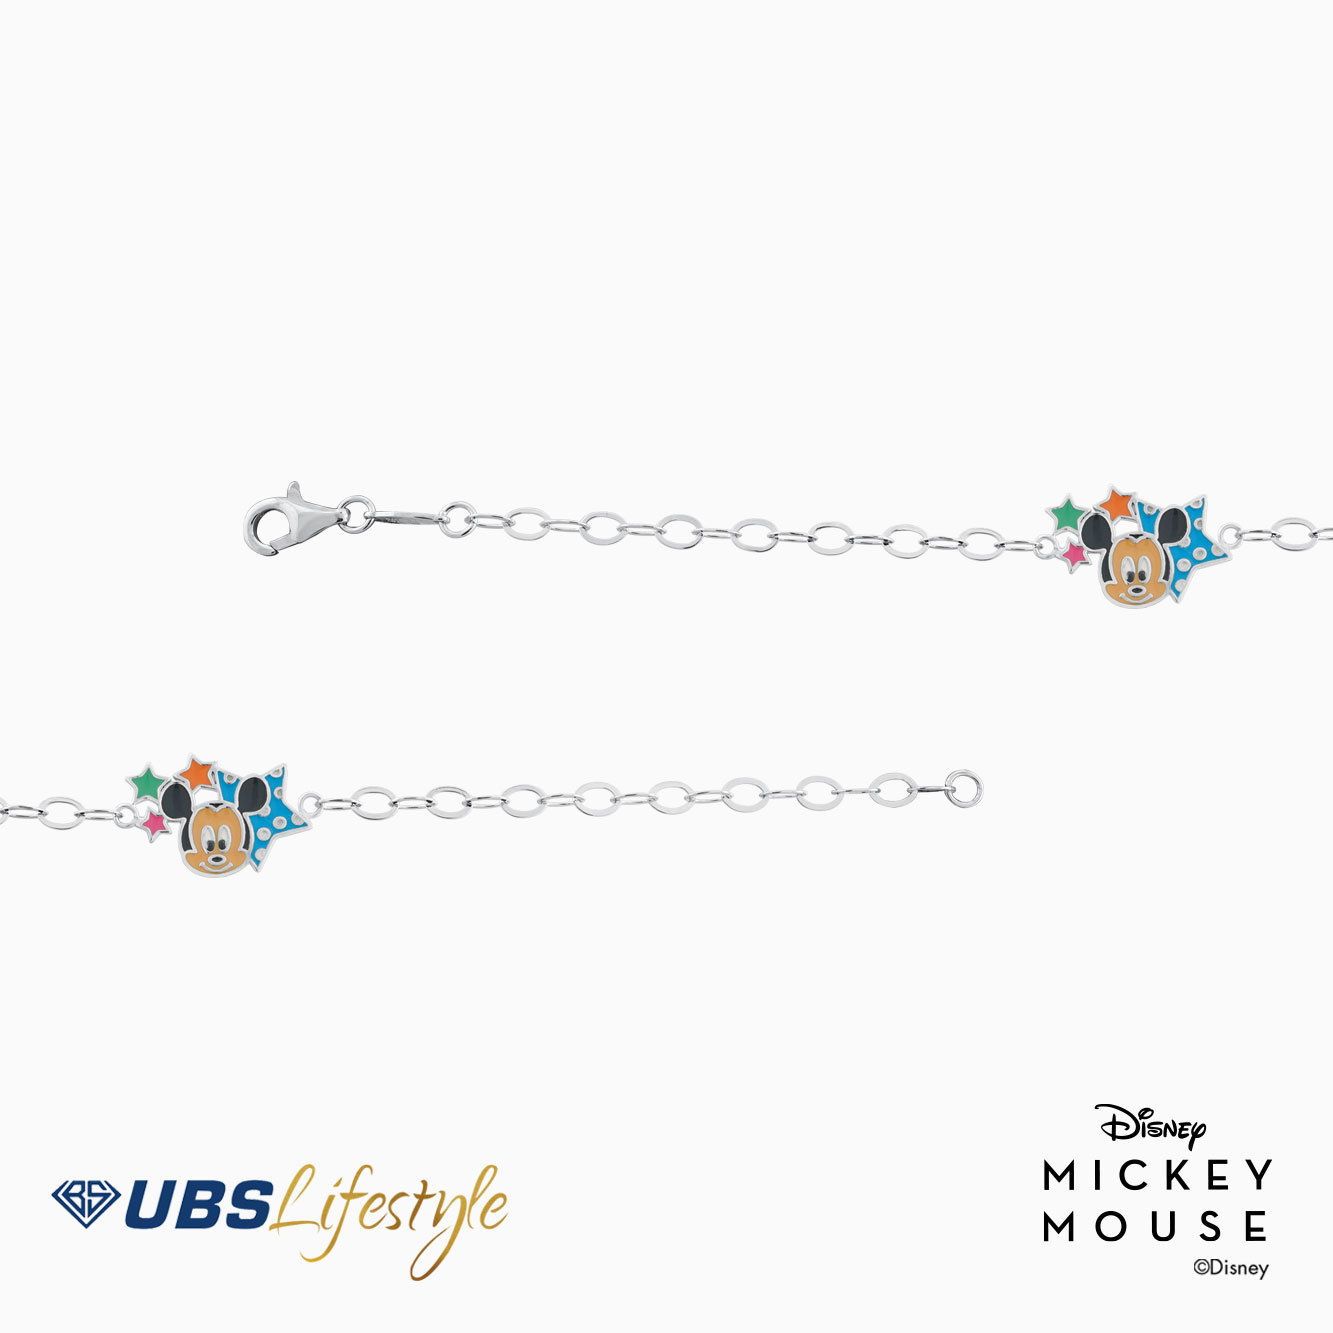 UBS Gelang Emas Anak Disney Mickey Mouse - Kgy0068 - 17K